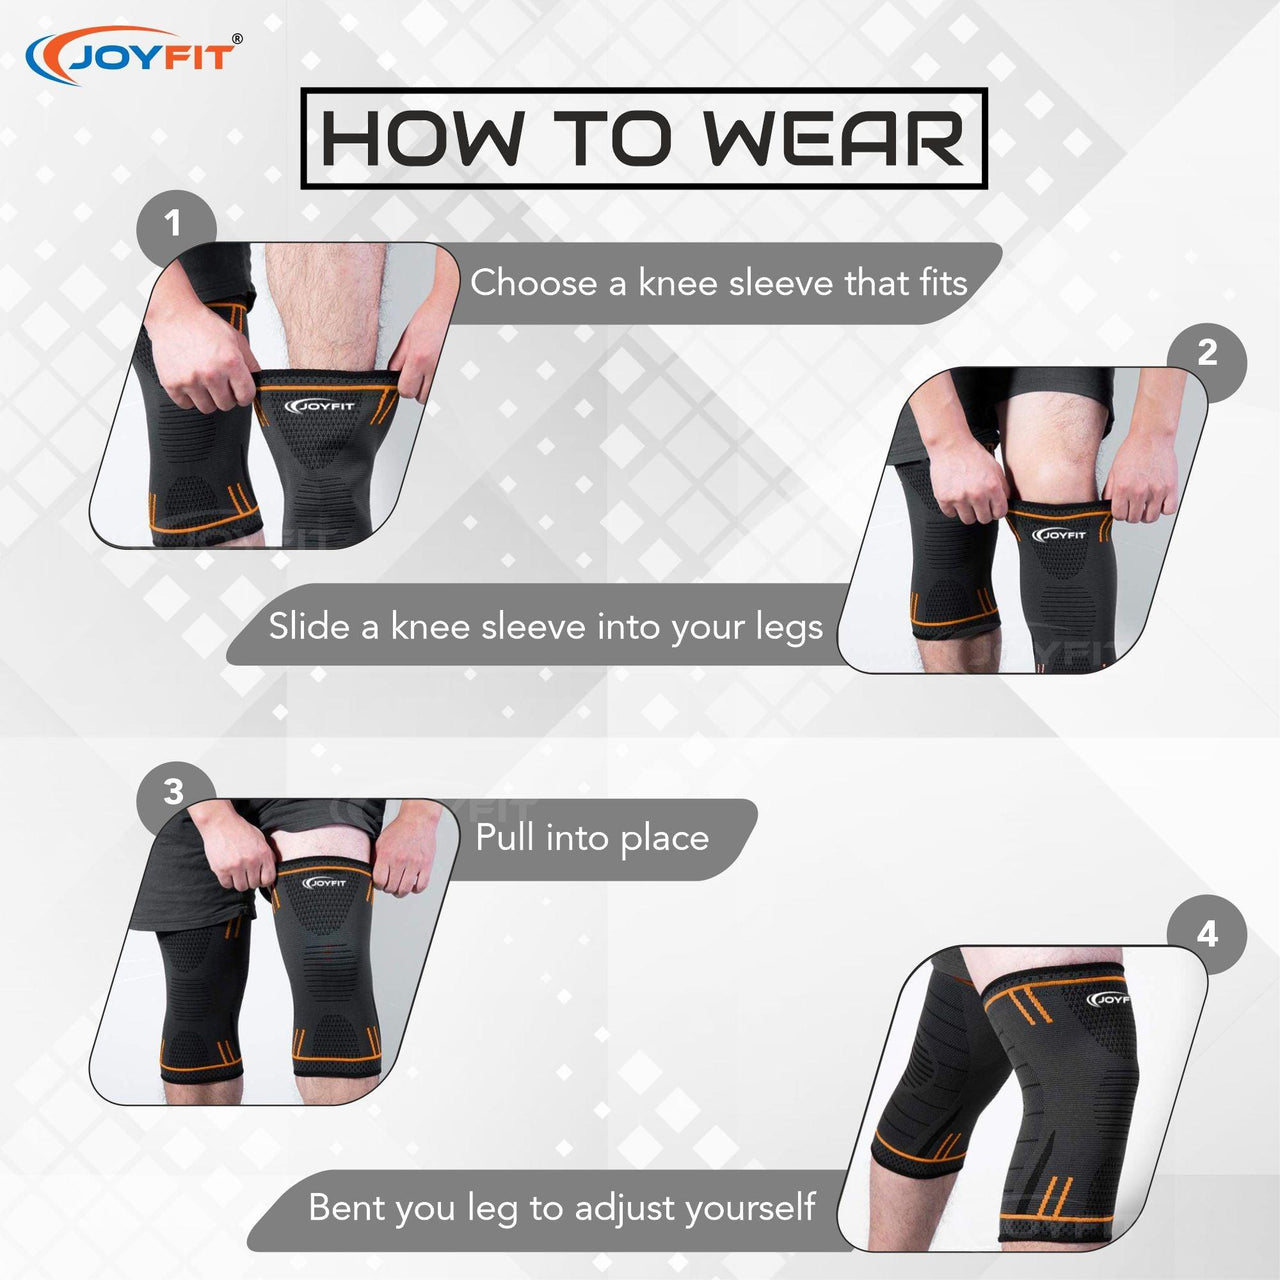 How to wear Knee wraps